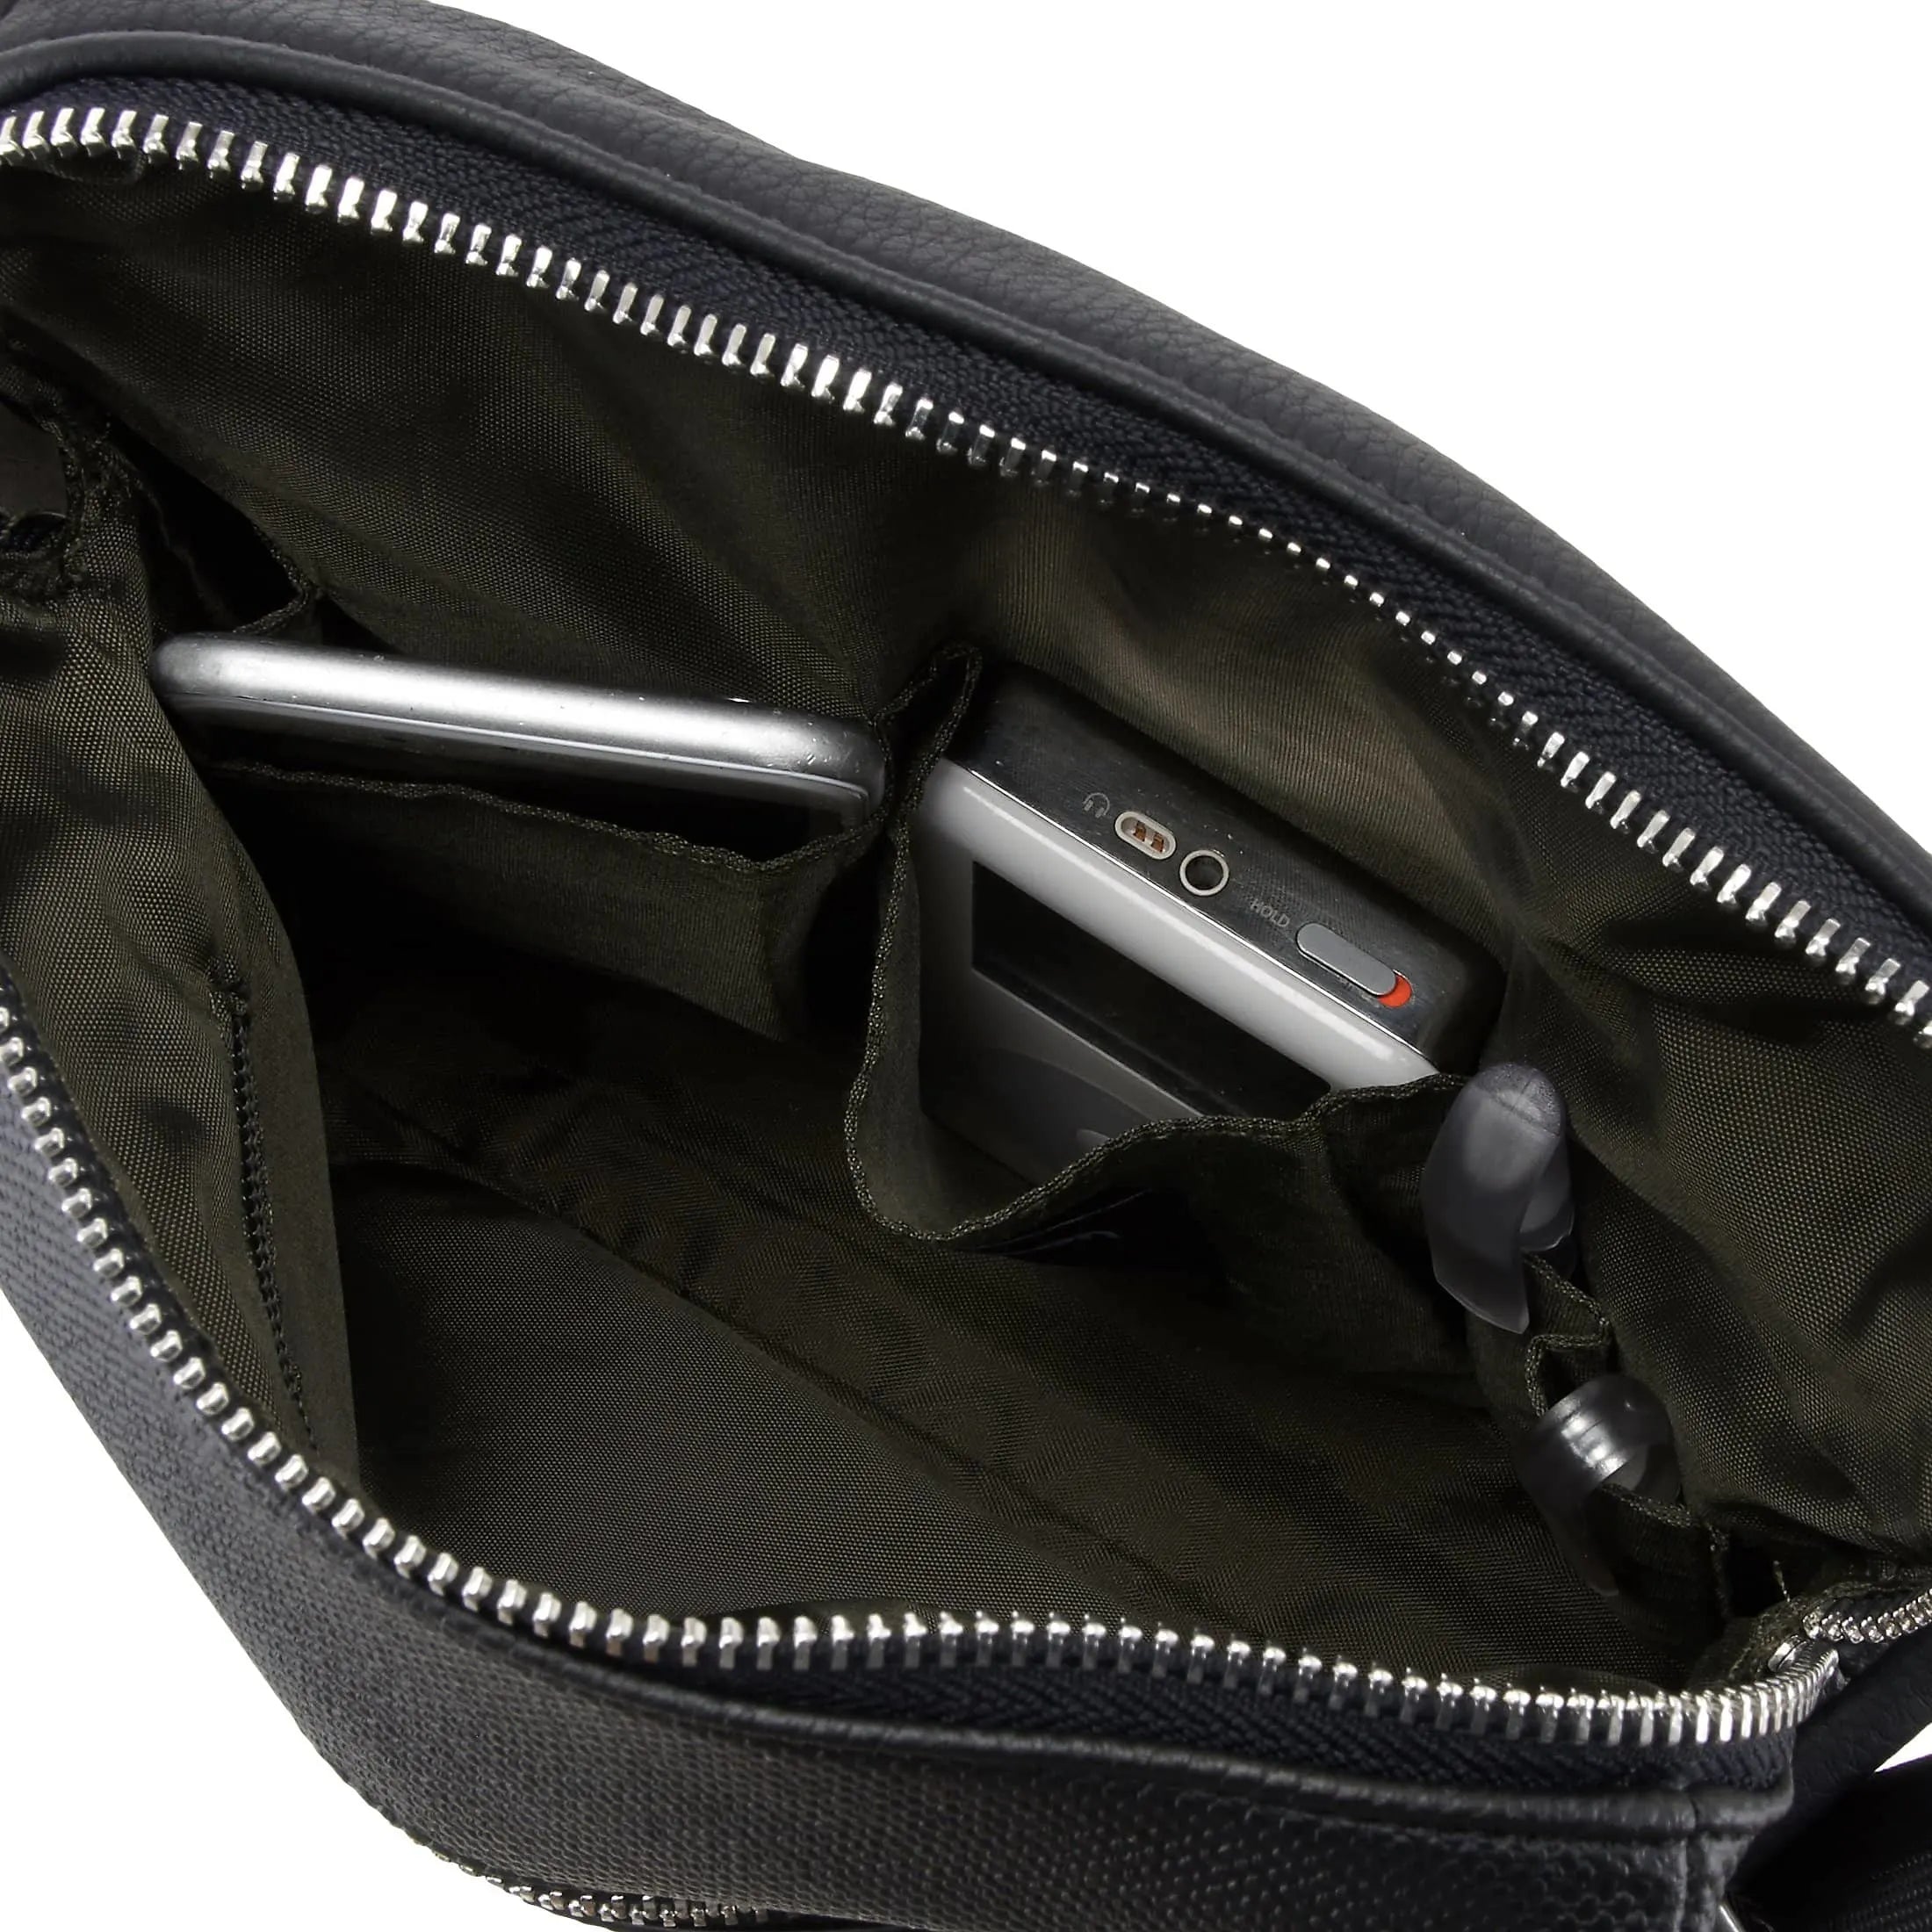 Strellson Royal Oak shoulder bag XSVZ 24 cm - black